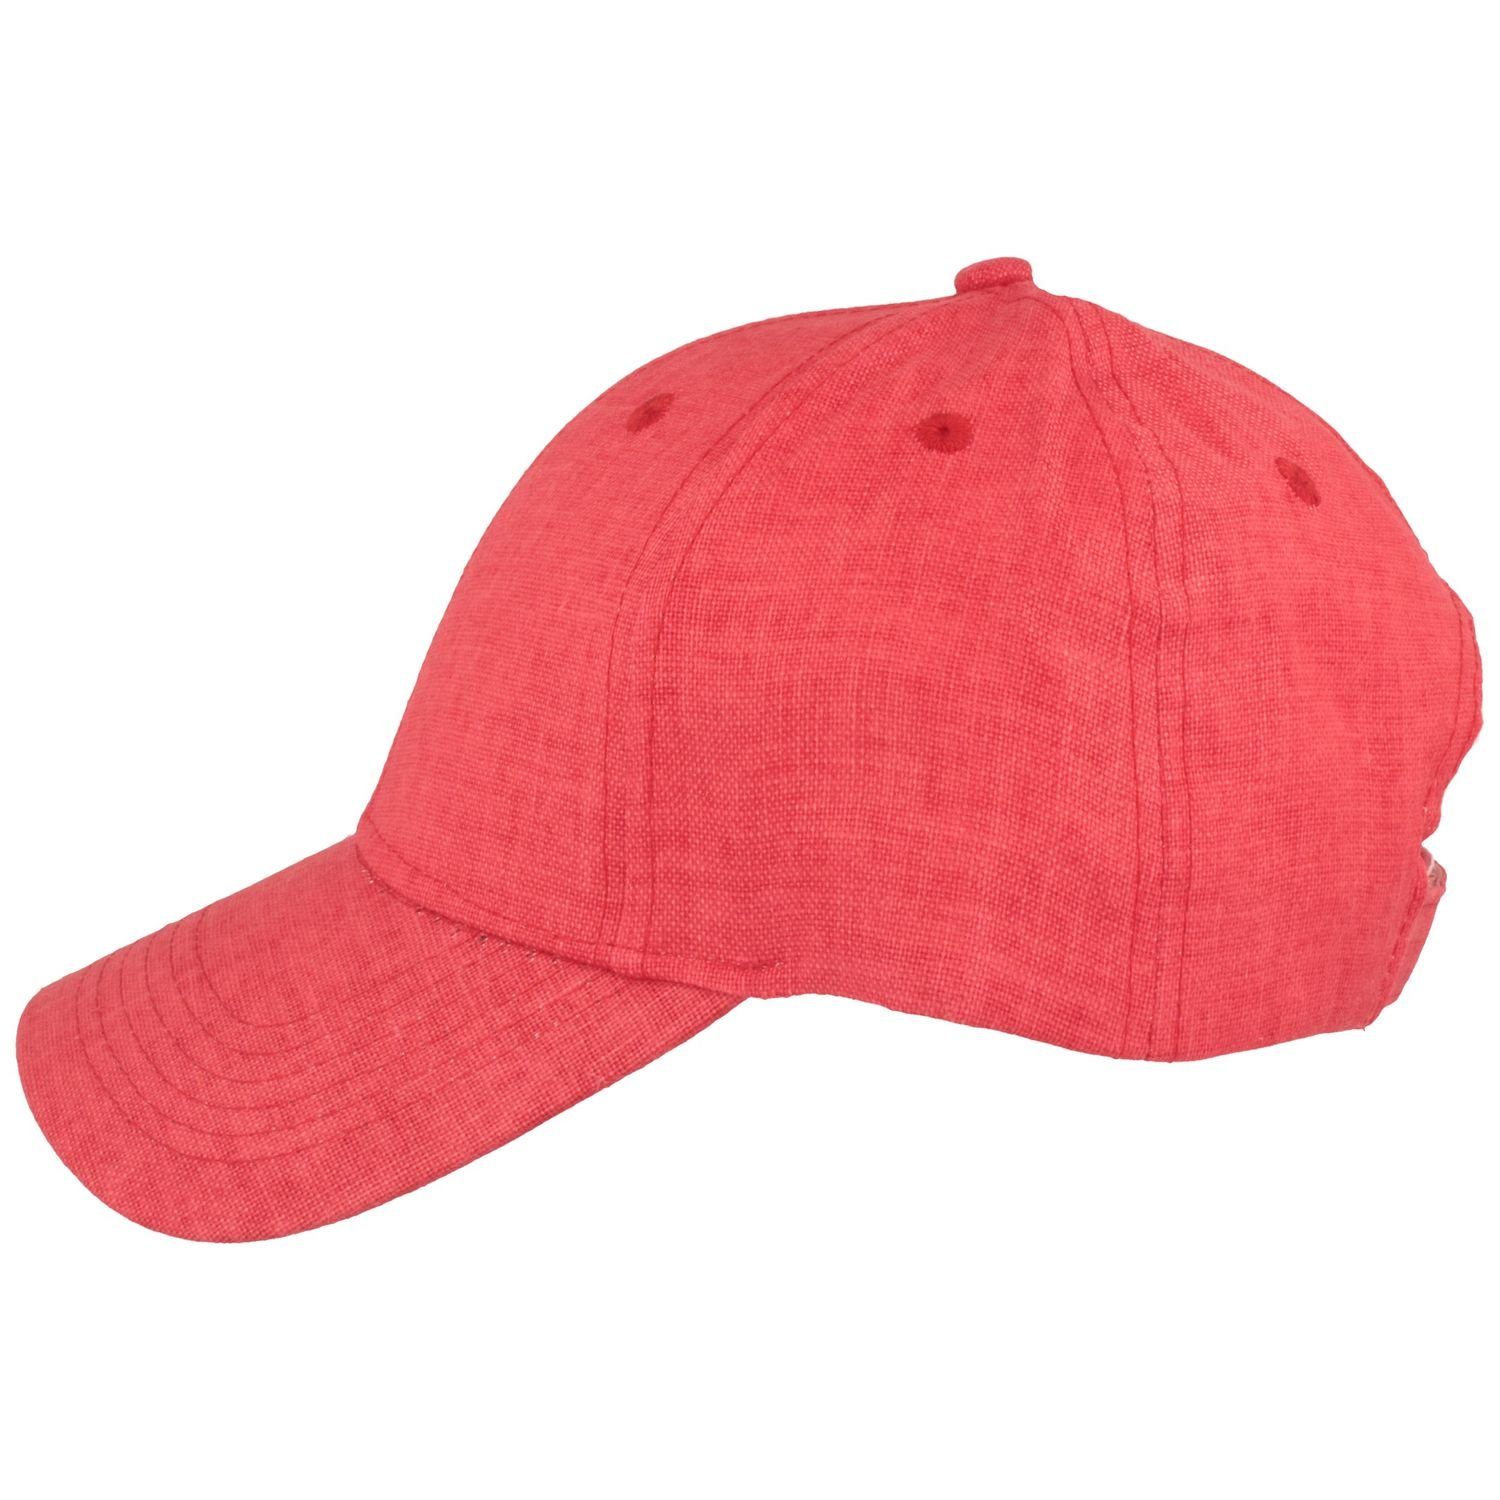 Leinen Baseball Damen Baseball-Cap Cap 301-Signalrot Baumwolle aus Breiter und